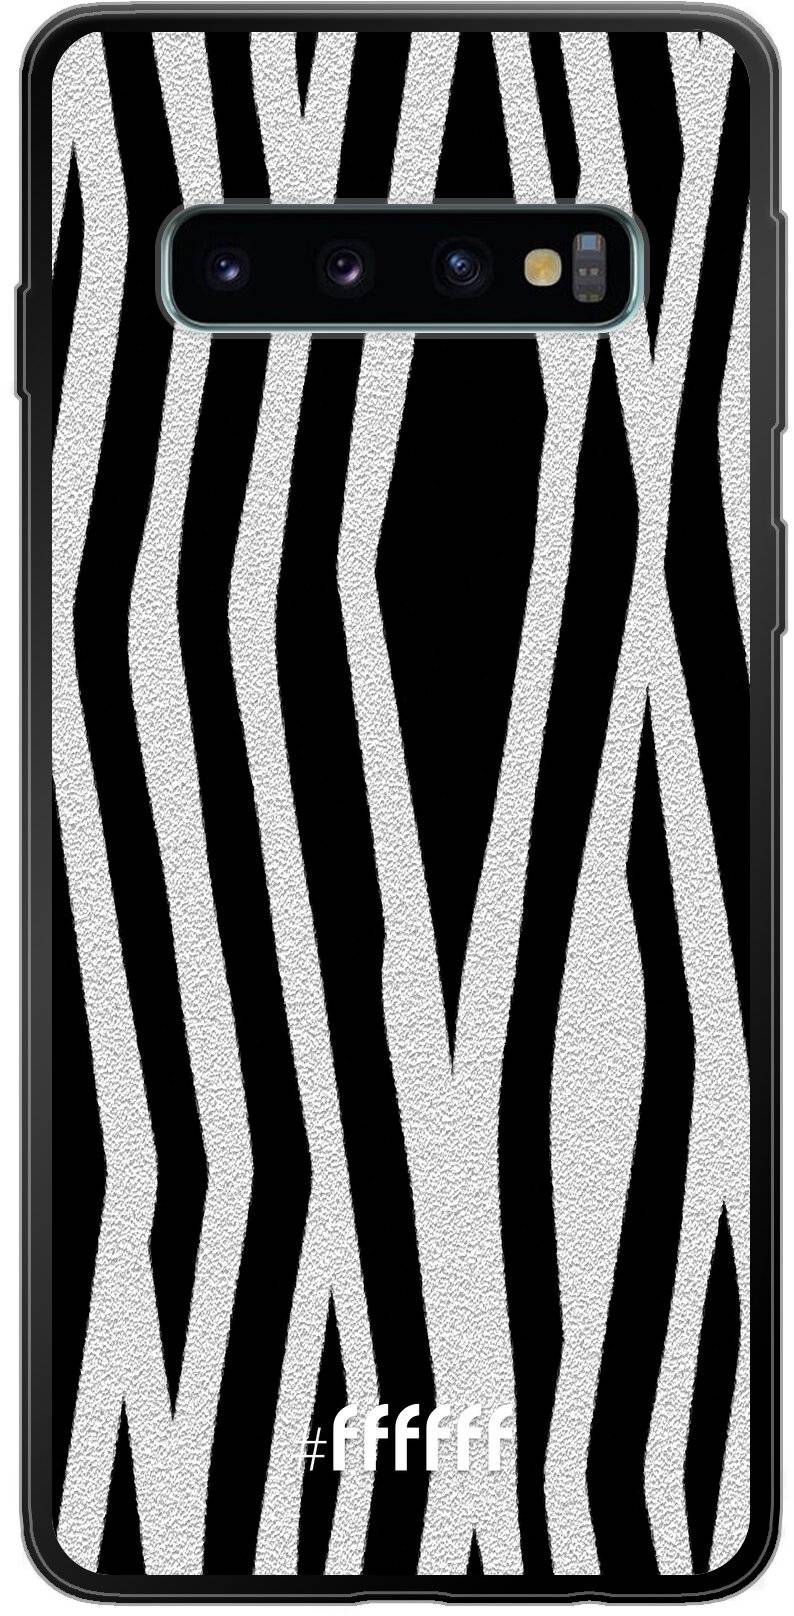 Zebra Print Galaxy S10